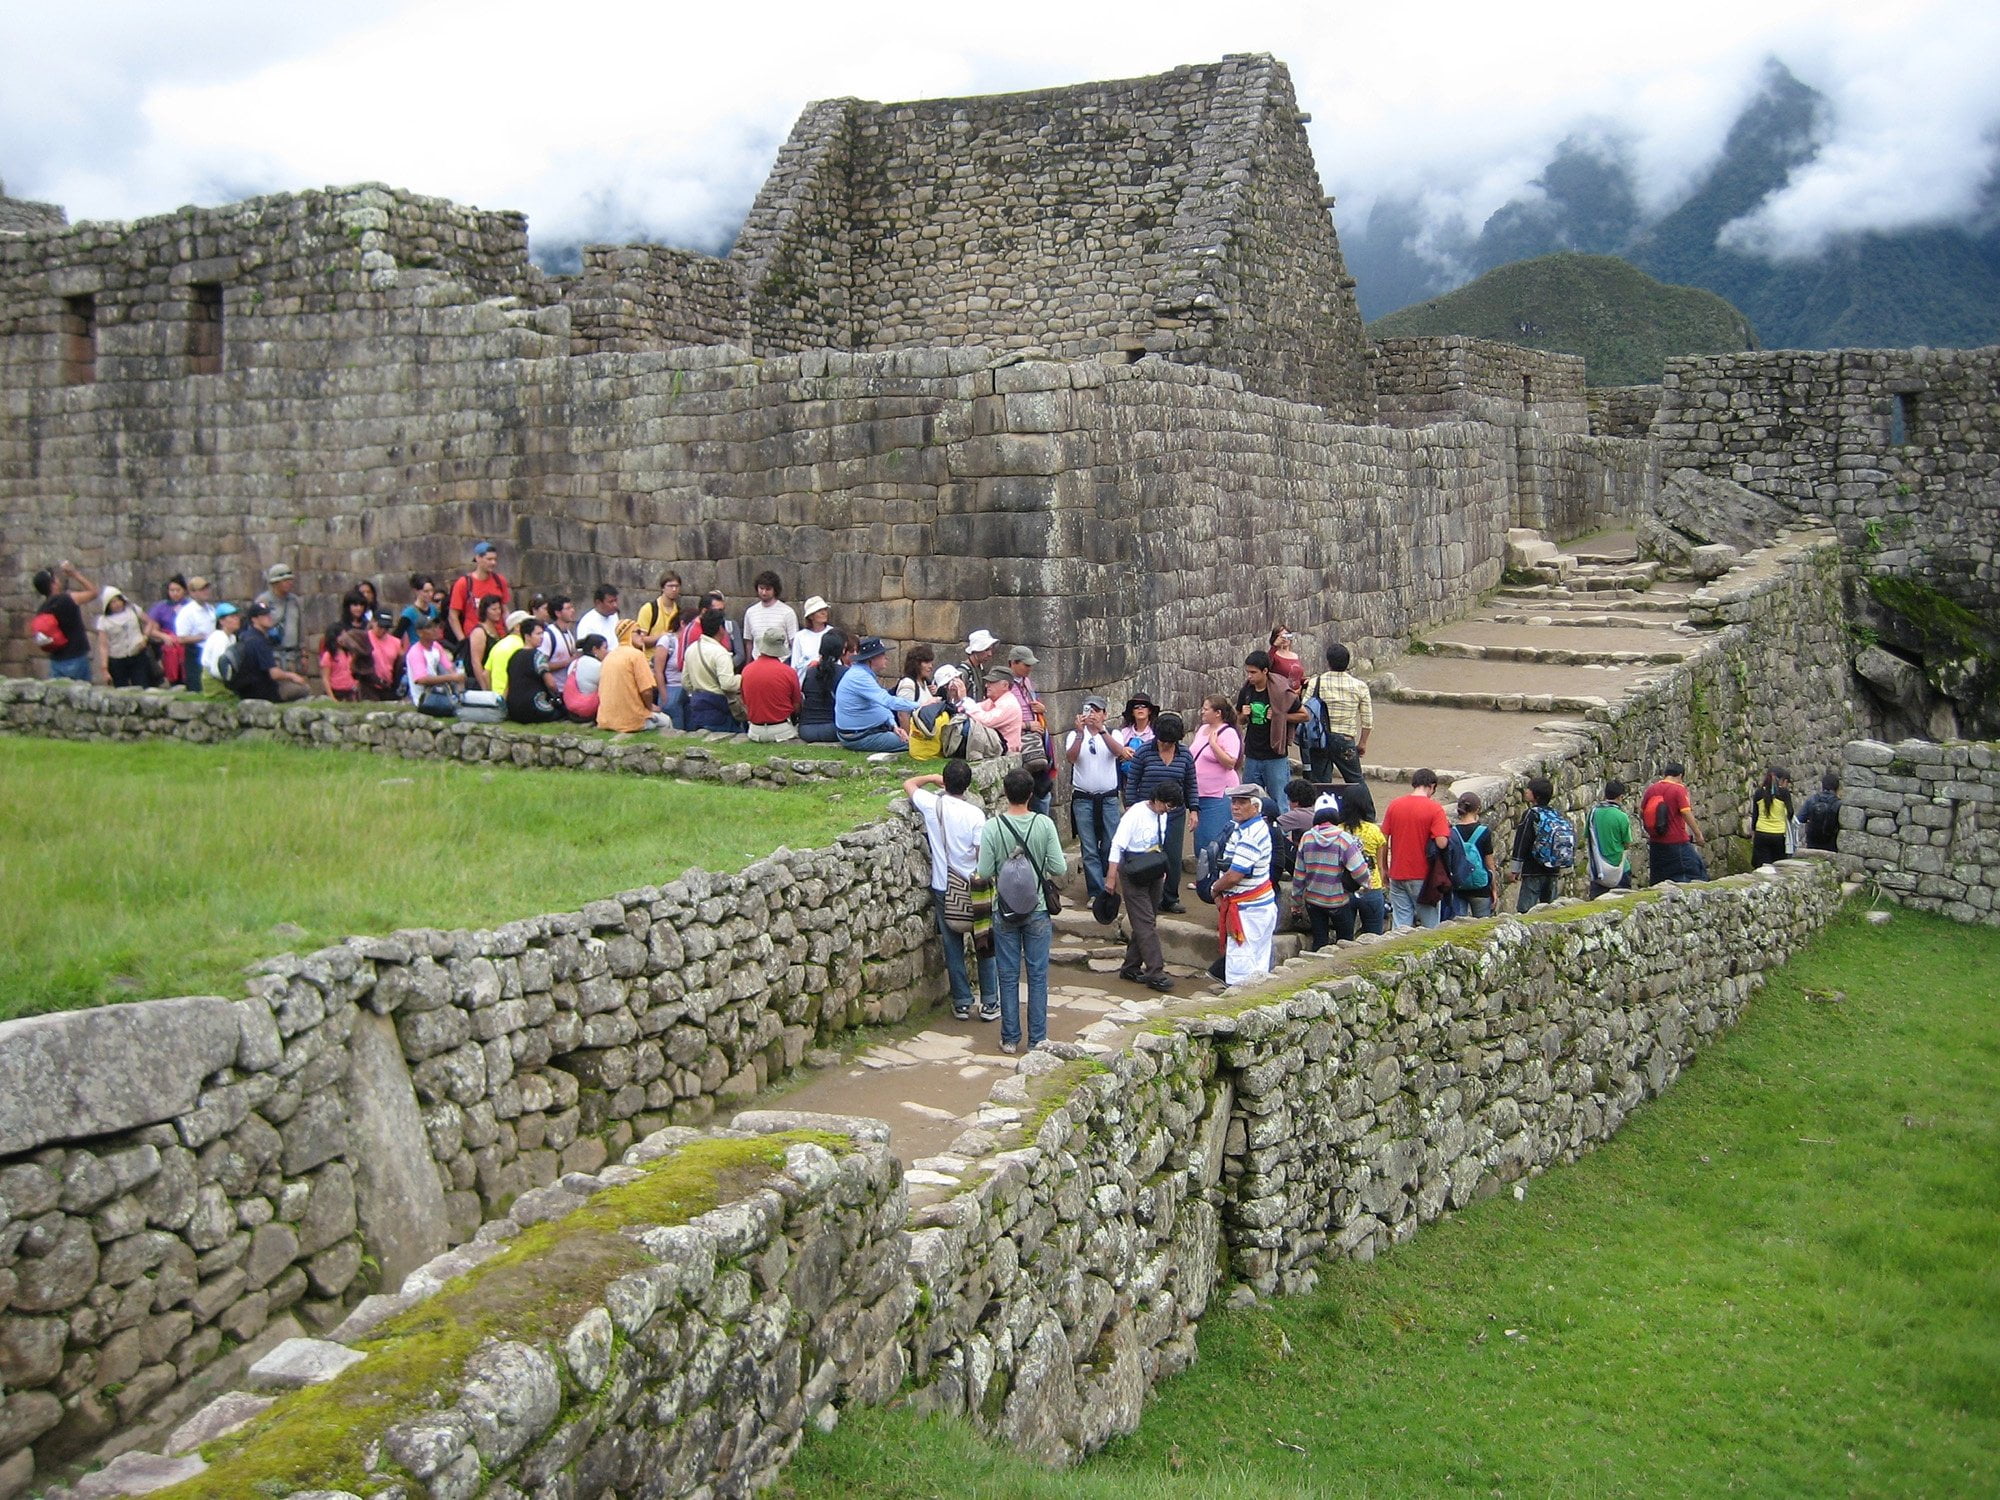 Ministerio de Cultura explica porque regularán visitas a Machu Picchu